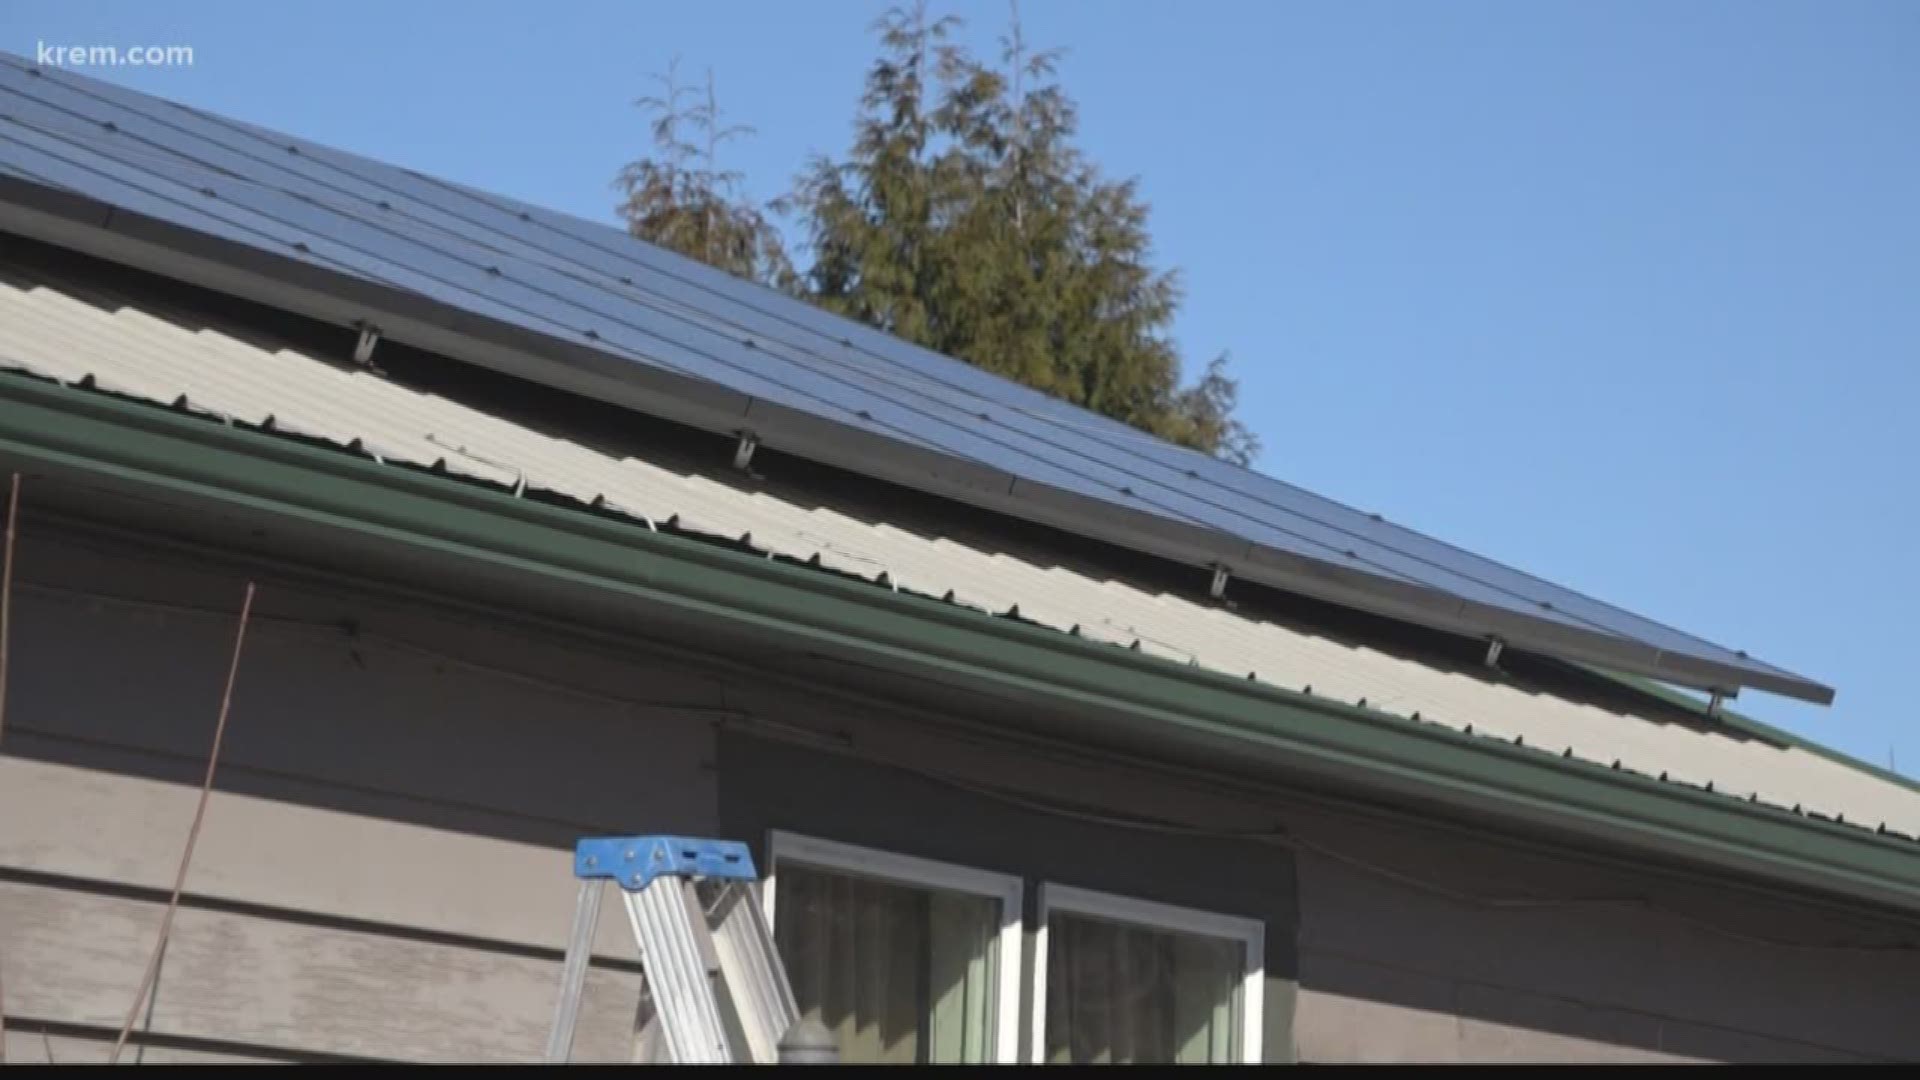 KREM Reporter Alexa Block spoke with a Spokane Valley resident who noticed higher fees after installing solar panels.